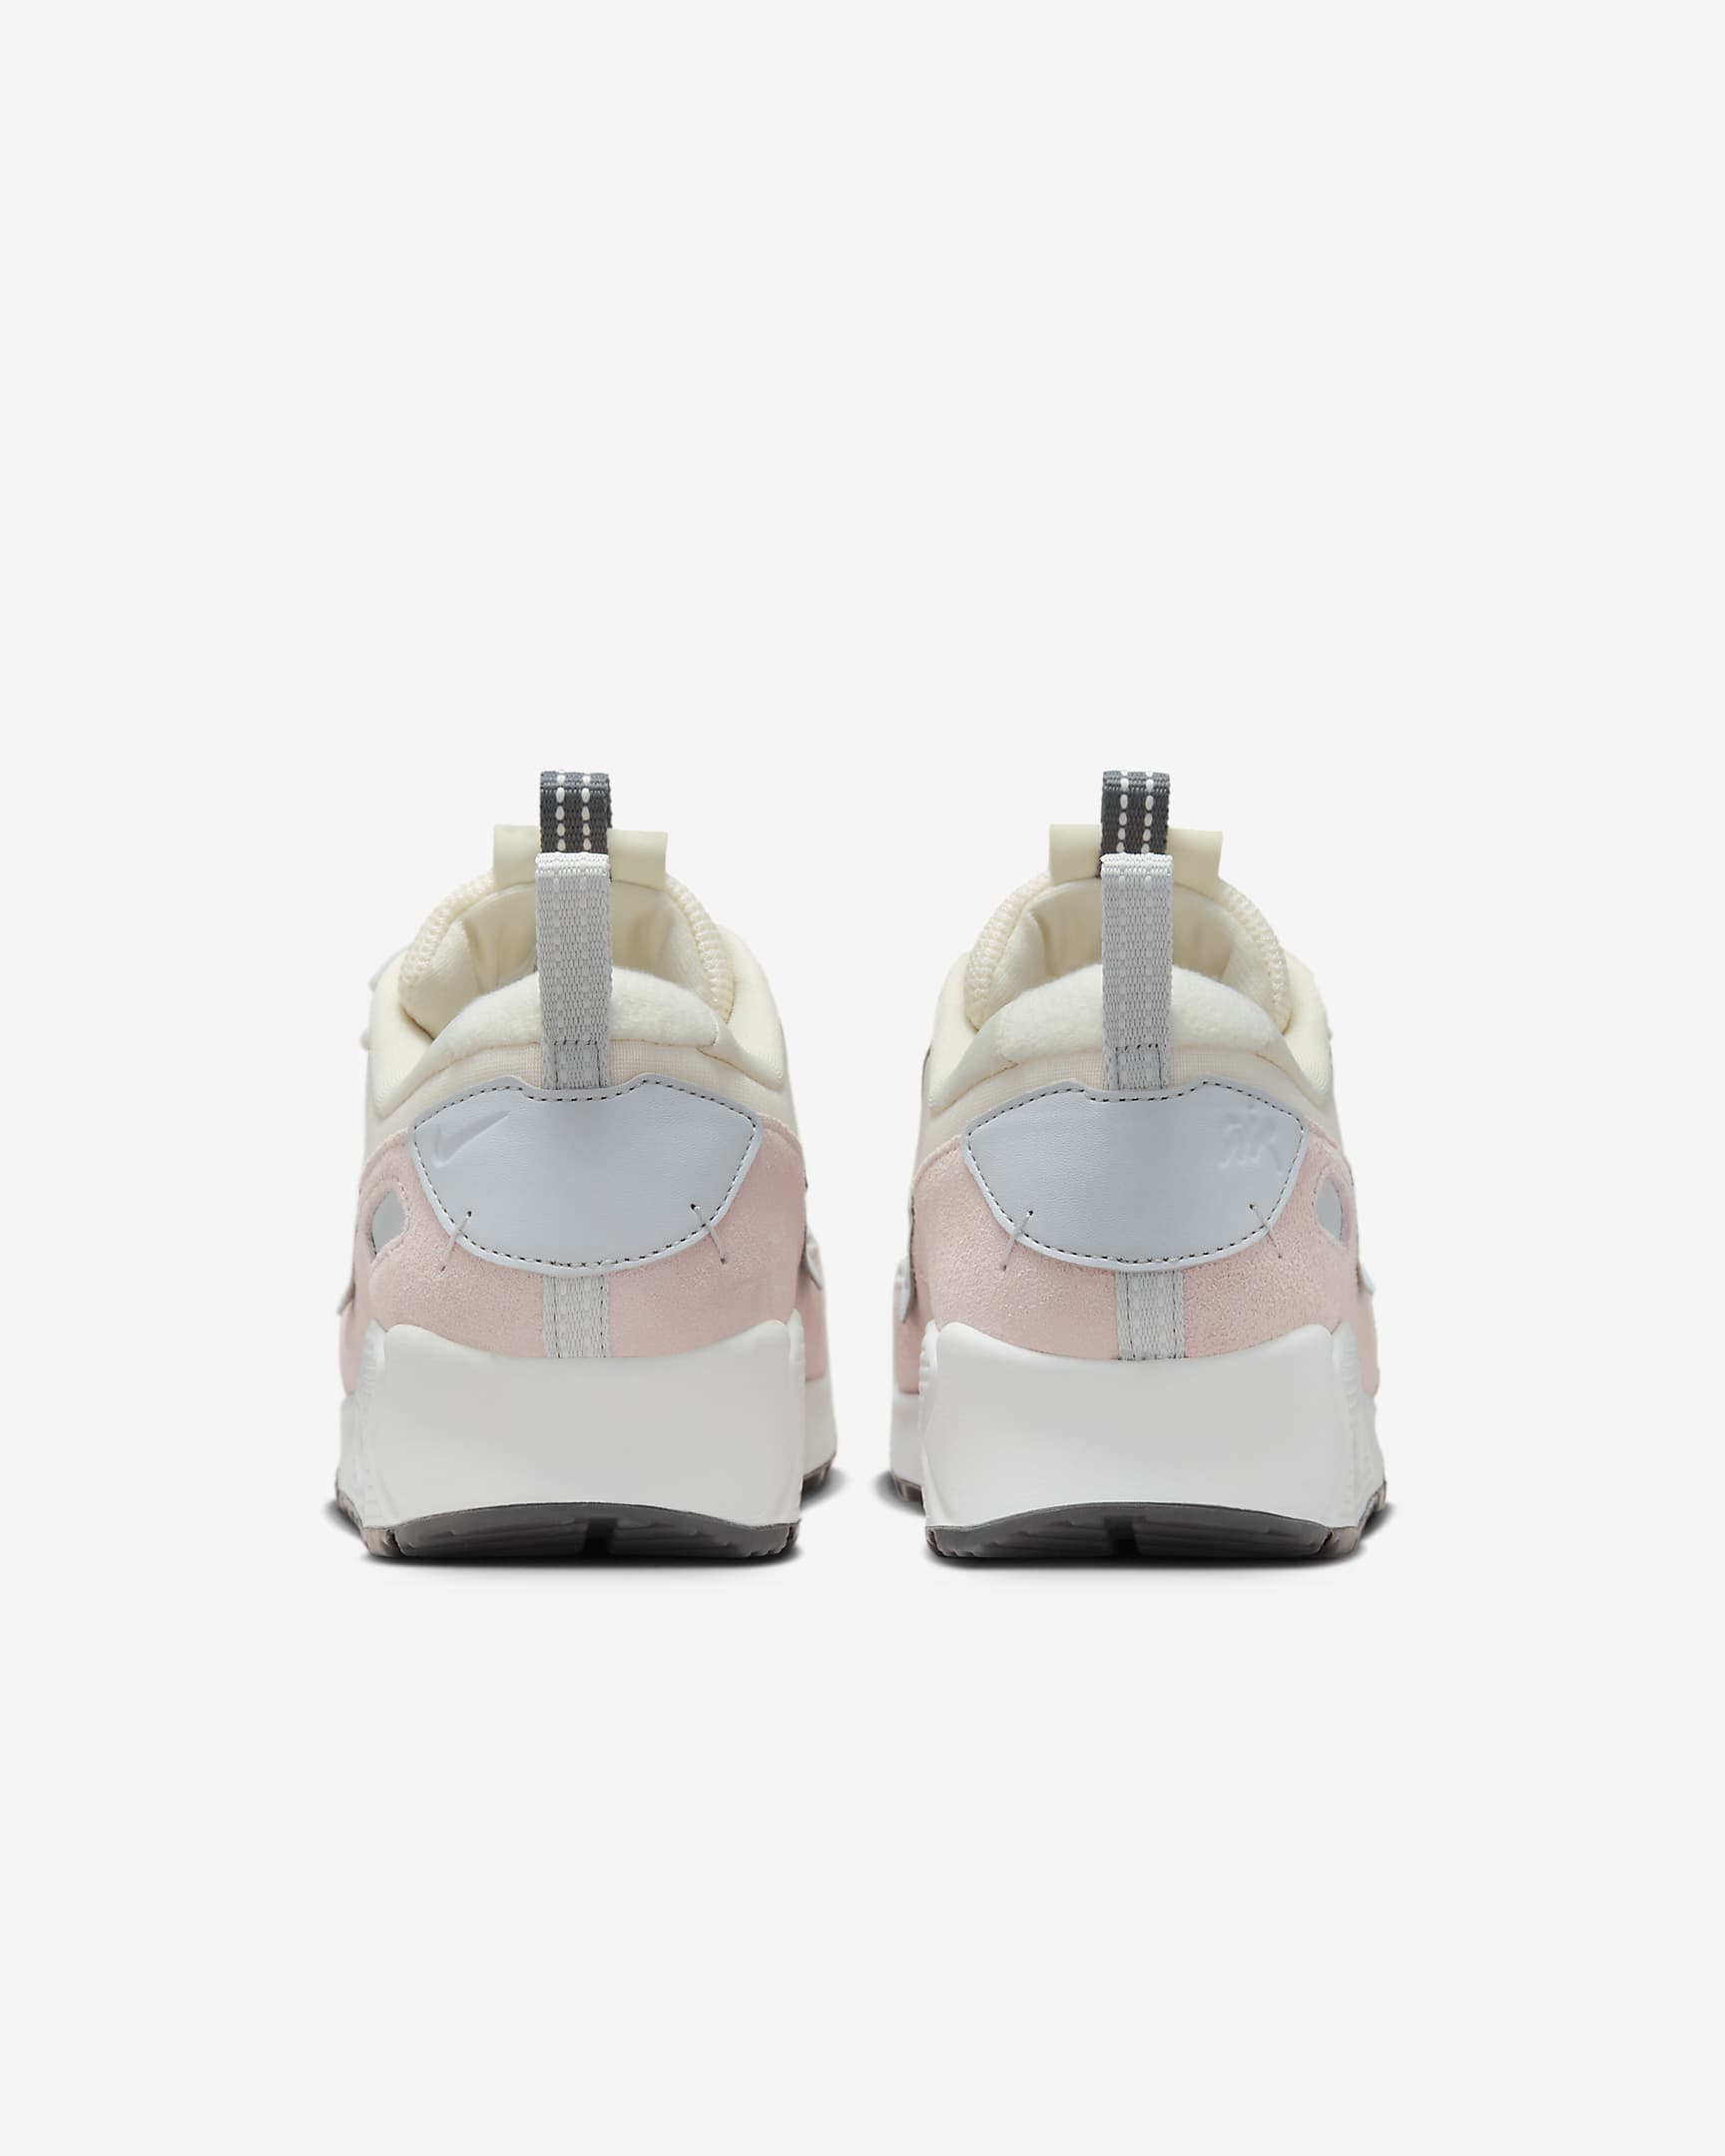 Nike Air Max 90 Futura Women's Shoes - Pale Ivory/Platinum Violet/Sea Glass/Phantom